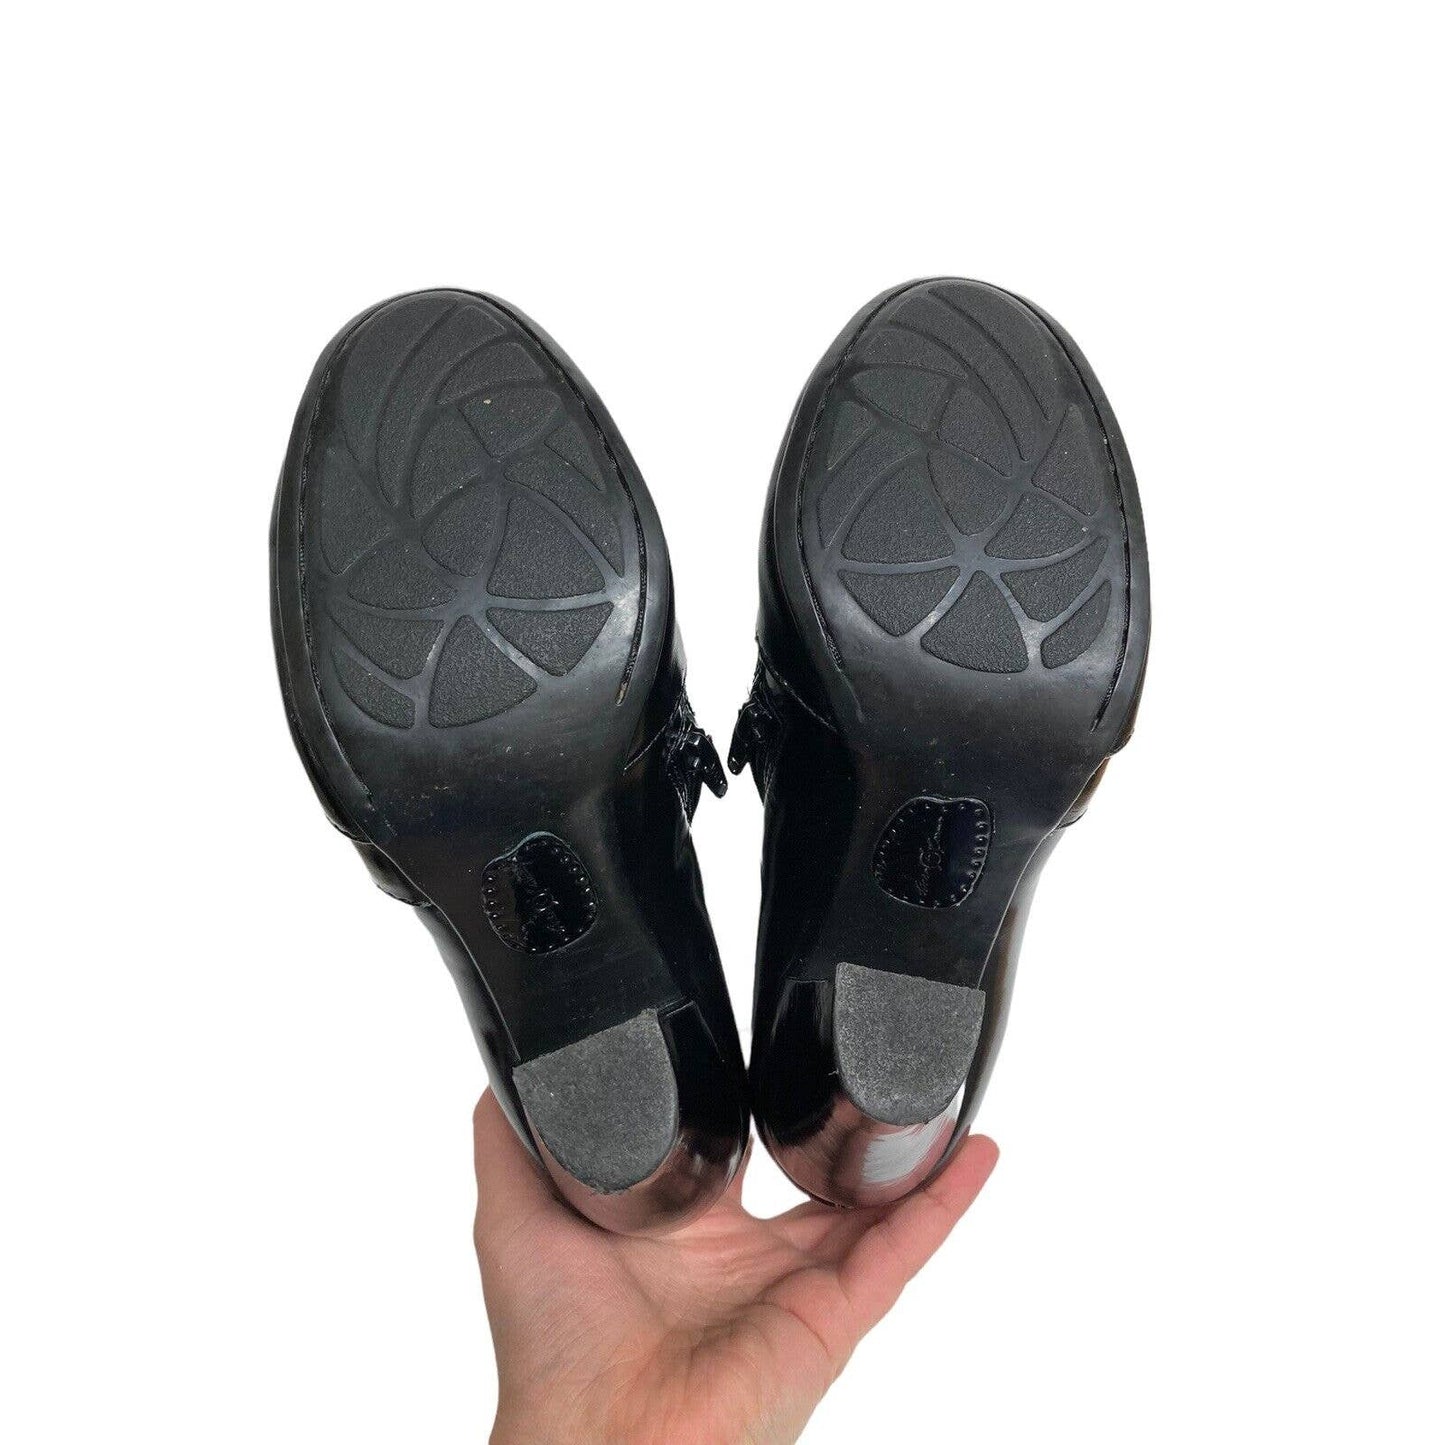 Born Crown Emie Ankle Booties Patent Box Calf Leather Boots Black Buckle sz 6.5